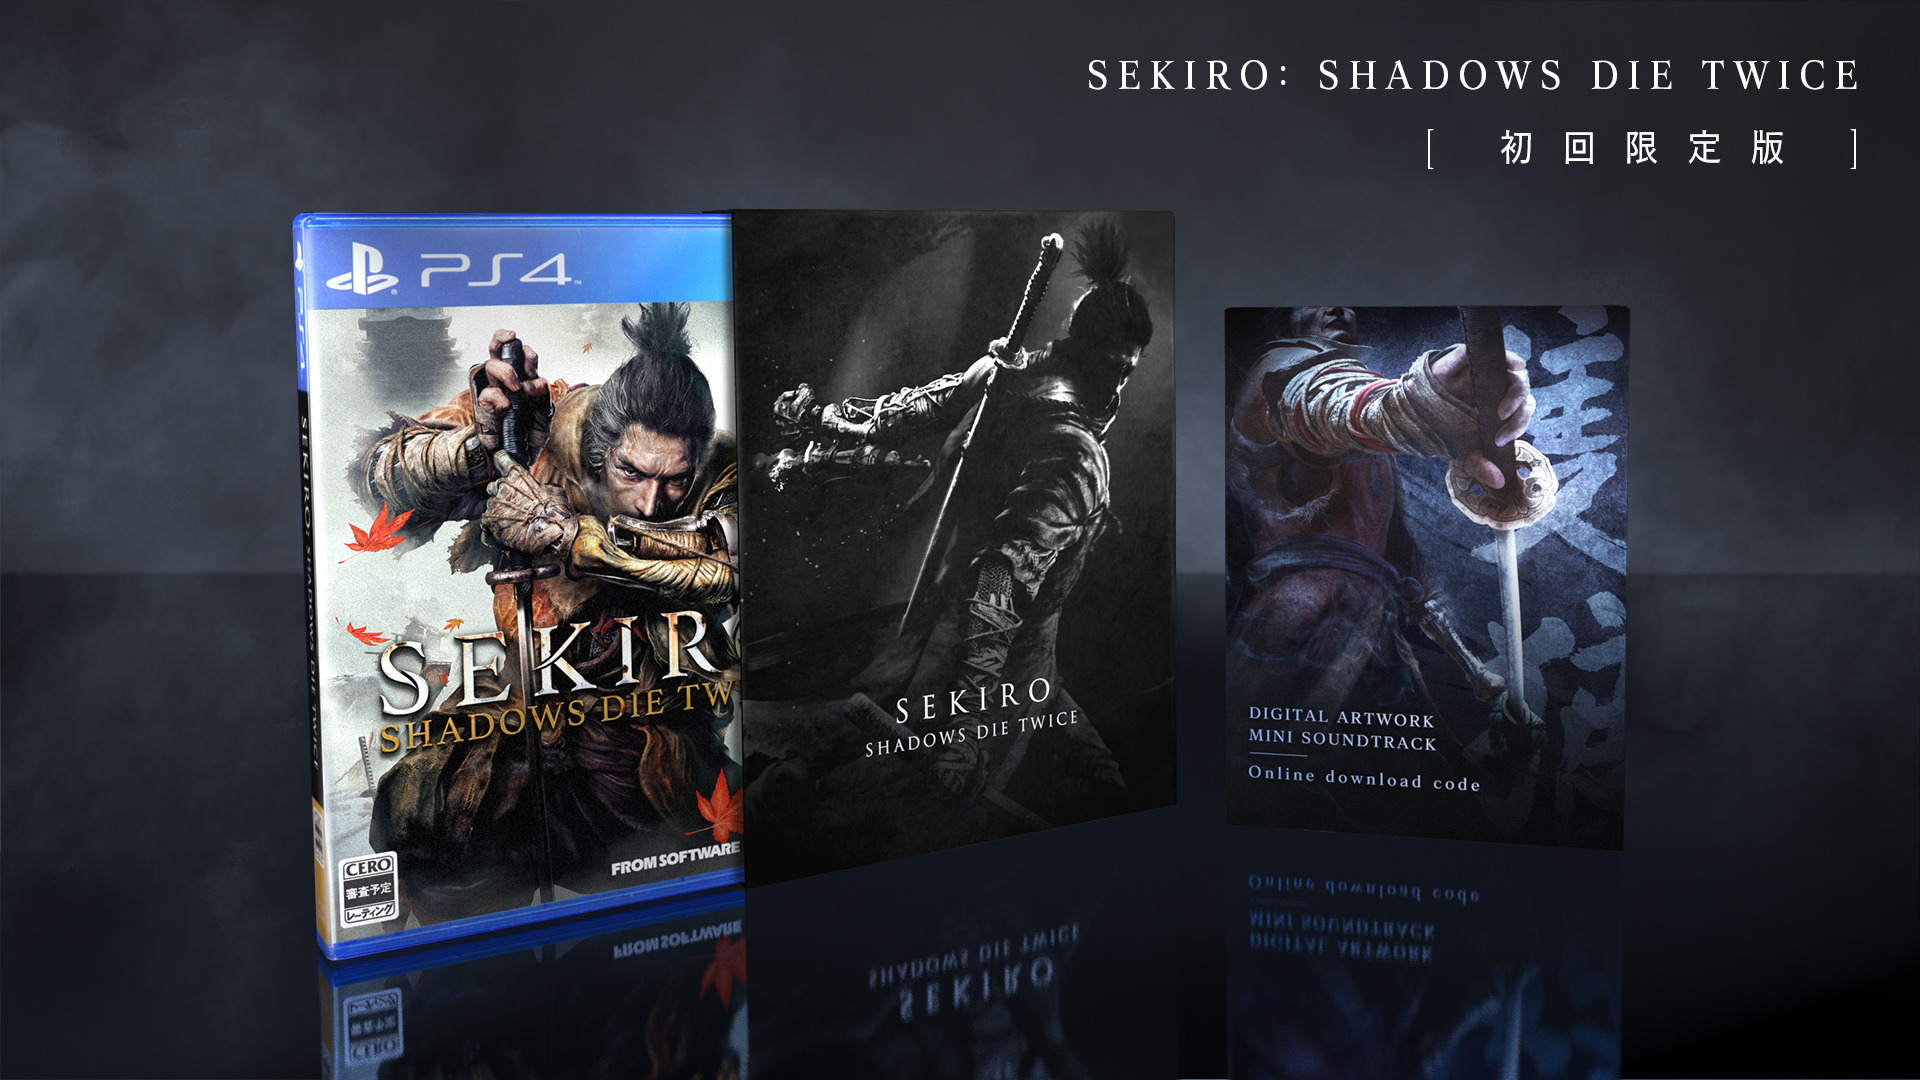 Sekiro shadow die twice купить ключ steam. Секиро ps4. Sekiro Edition ps4. Sekiro Shadows die twice Collector's Edition. Sekiro: Shadows die twice - GOTY Edition.